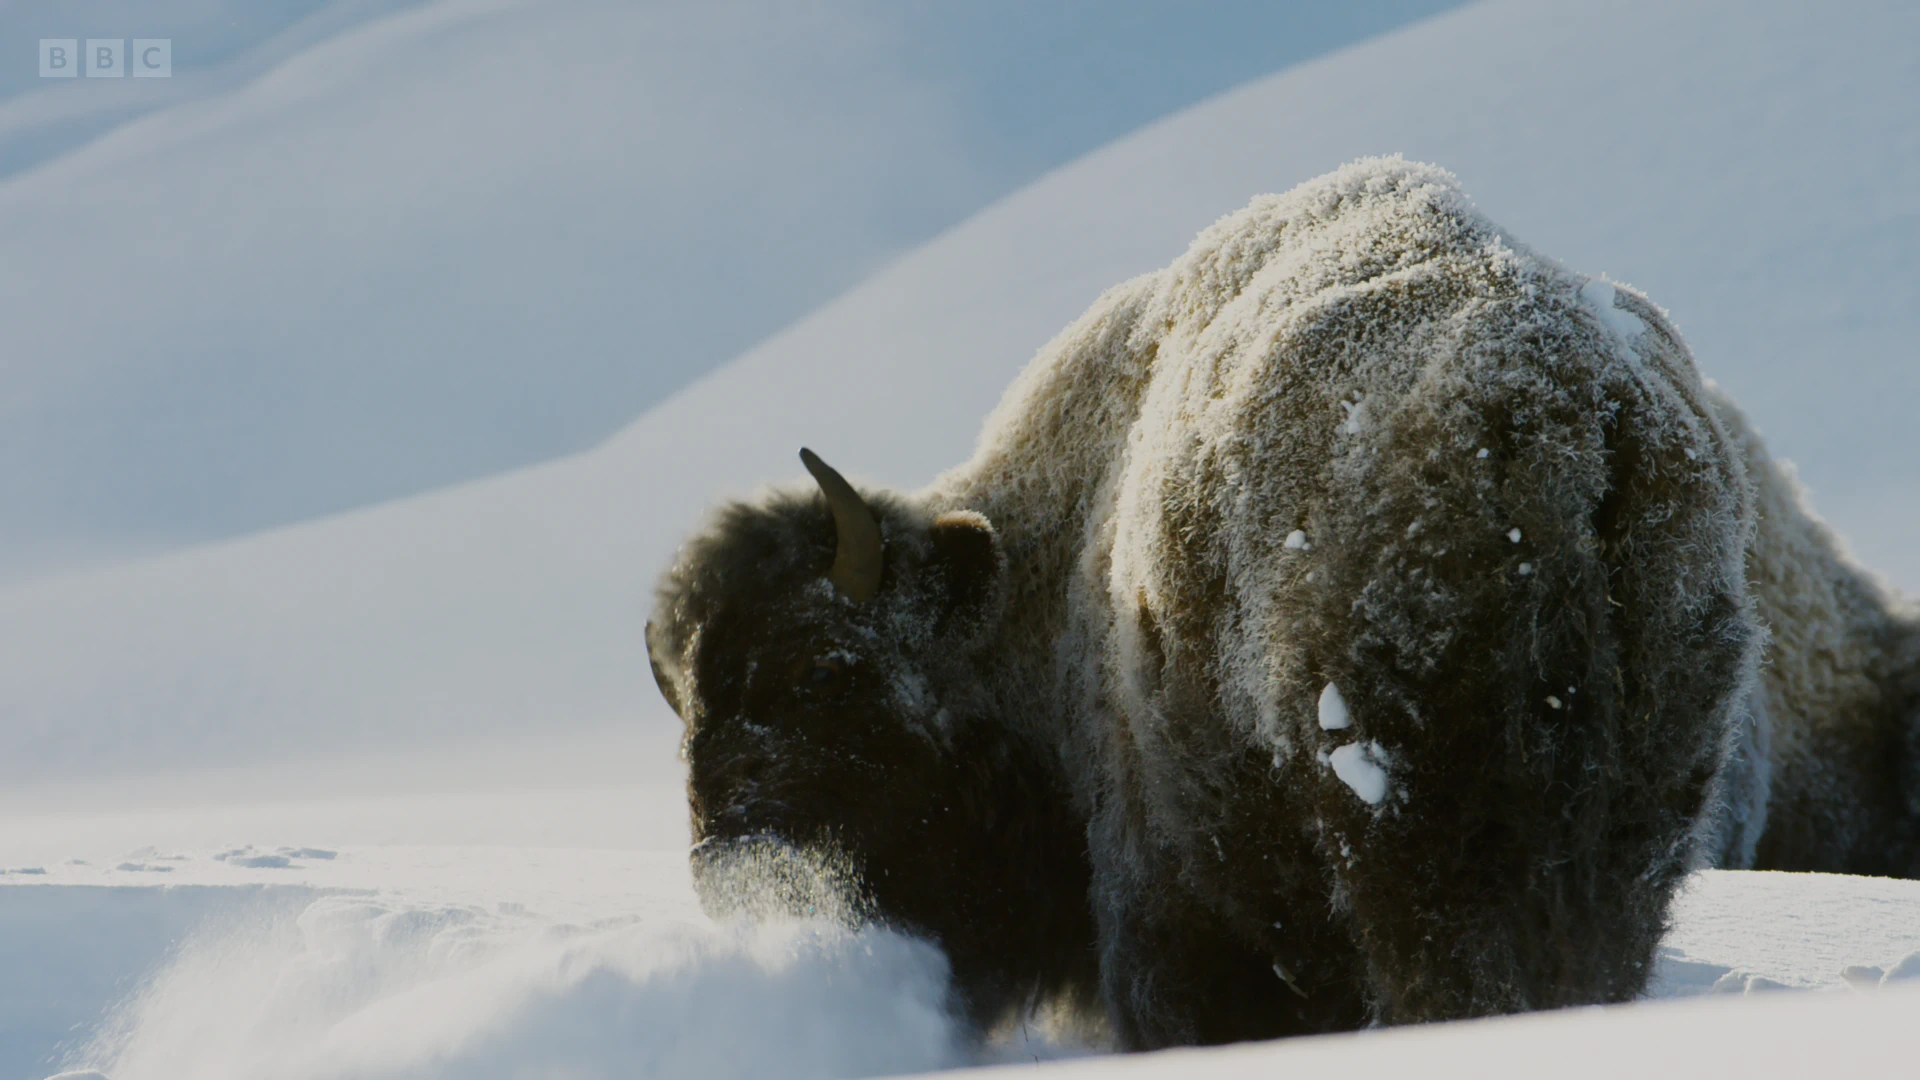 Plains bison (Bison bison bison) as shown in Planet Earth II - Grasslands